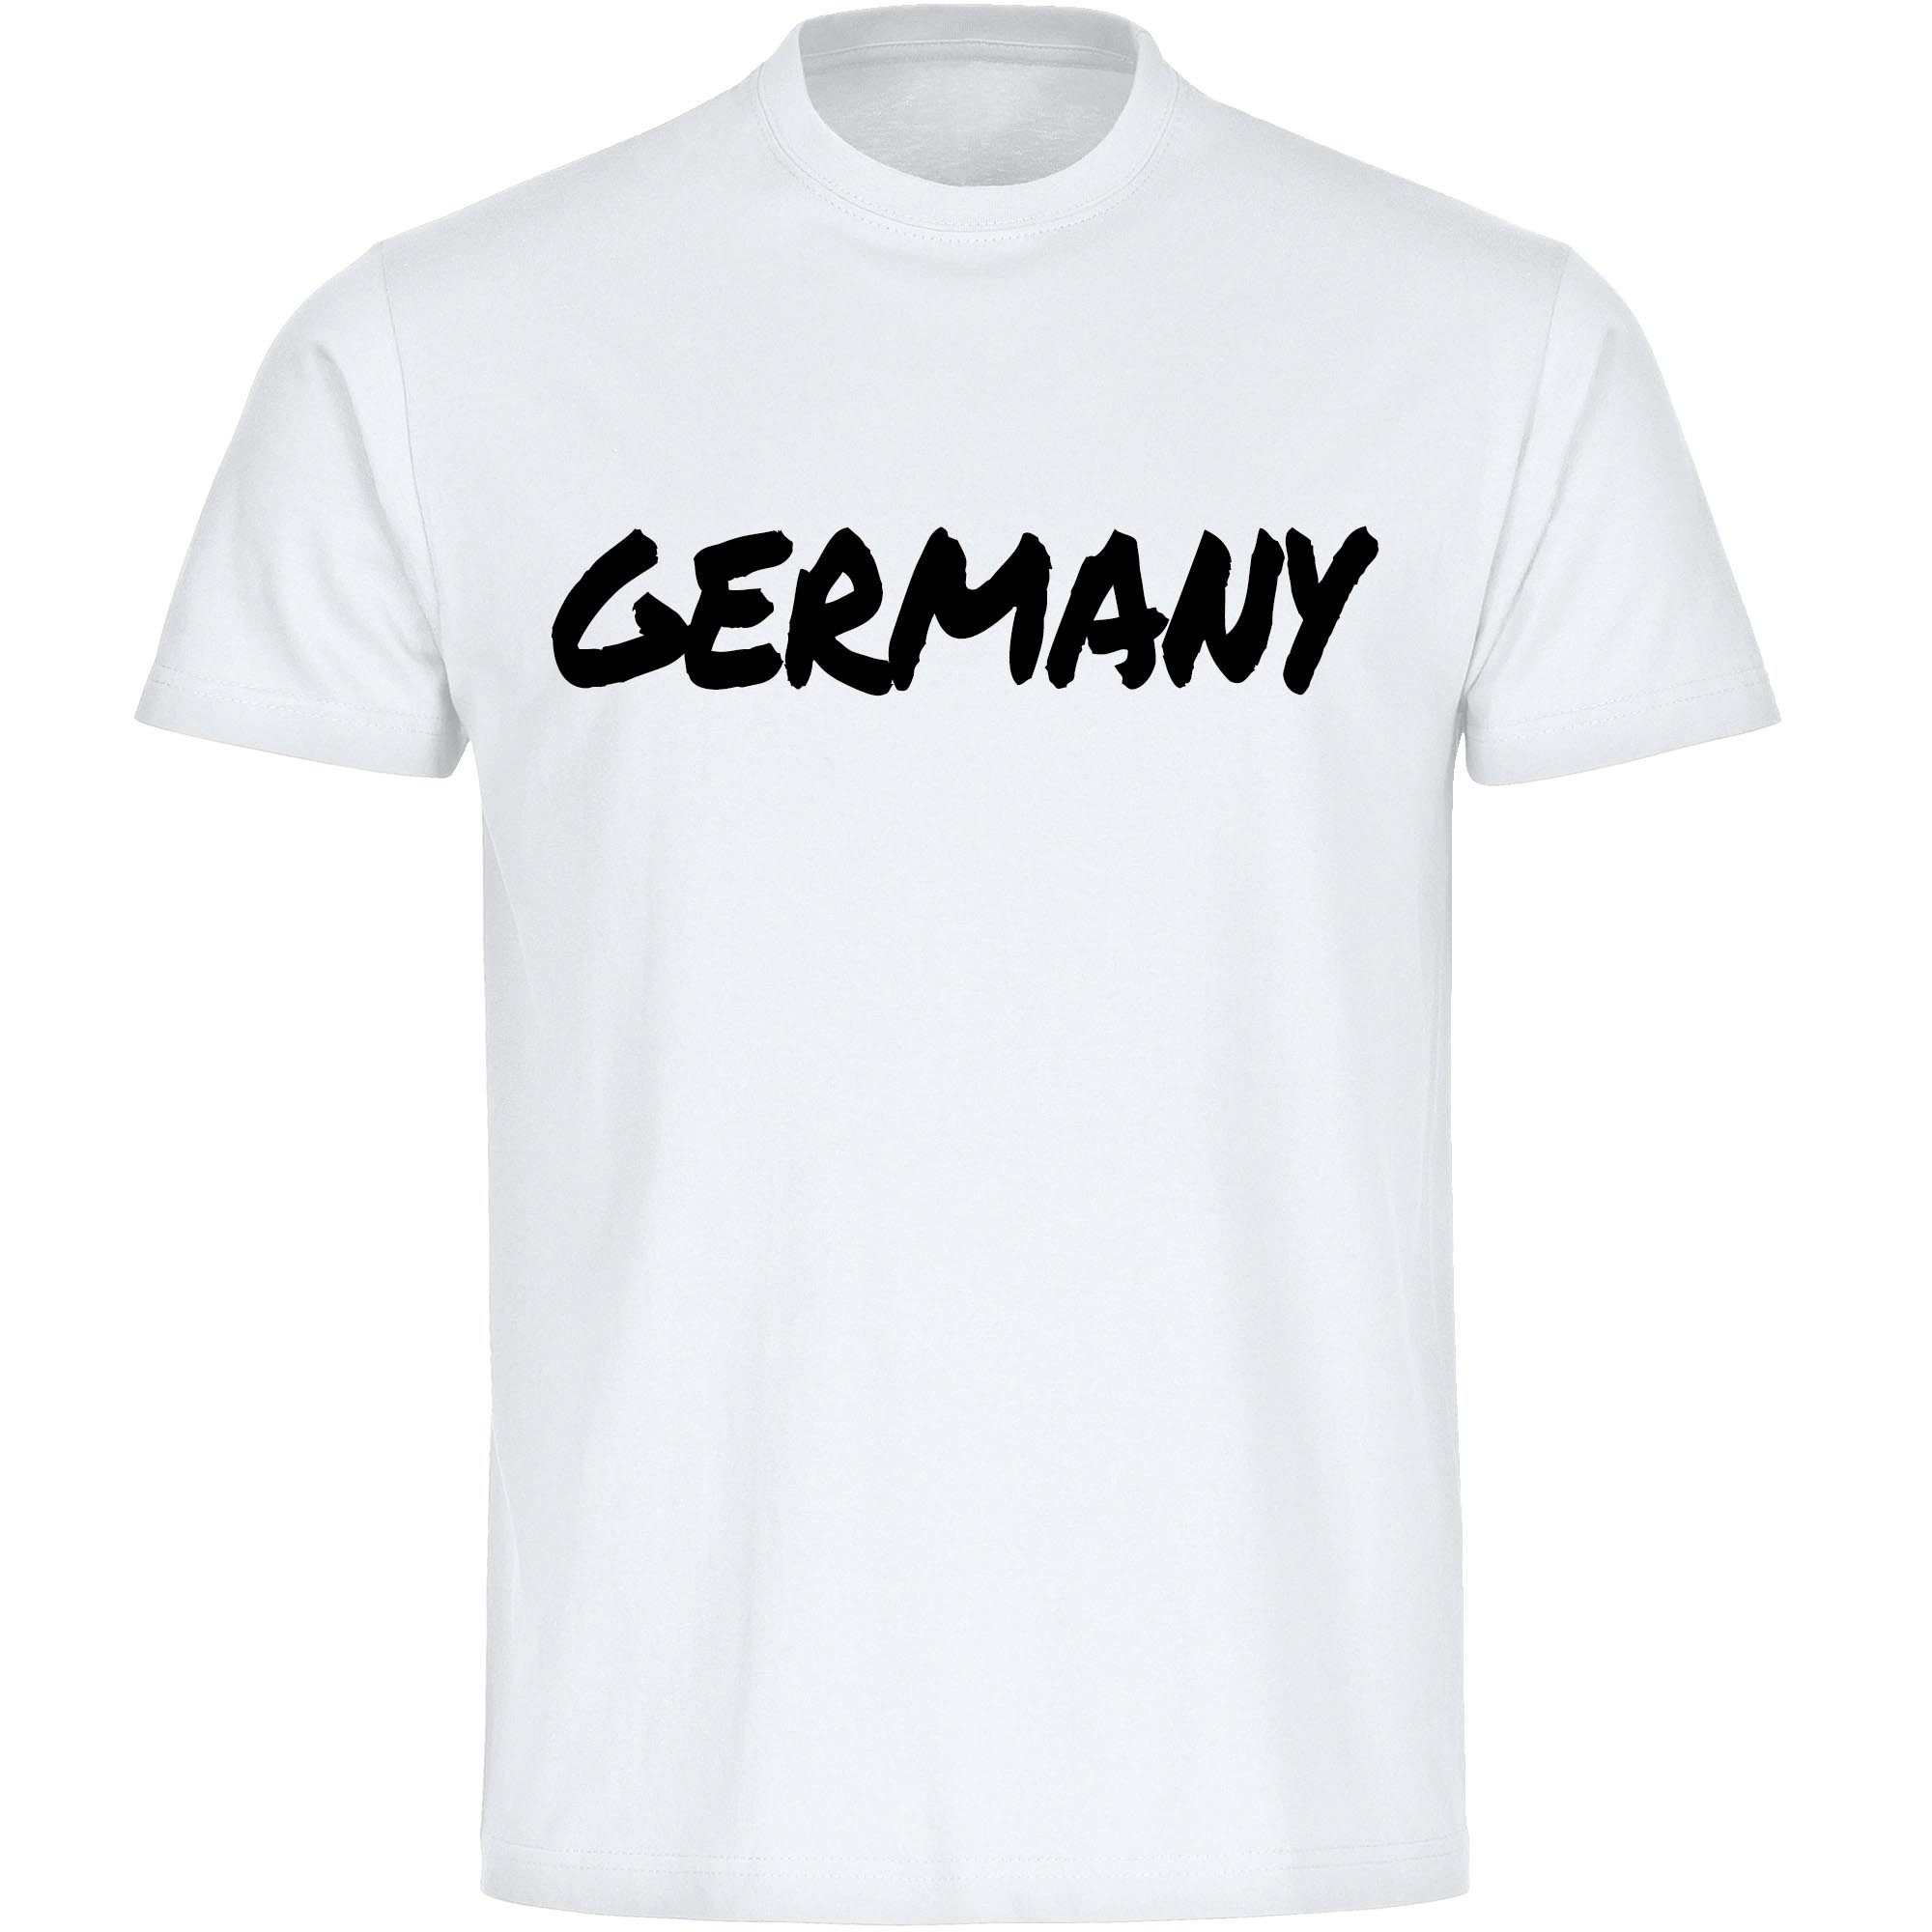 multifanshop T-Shirt Herren Germany - Textmarker - Männer